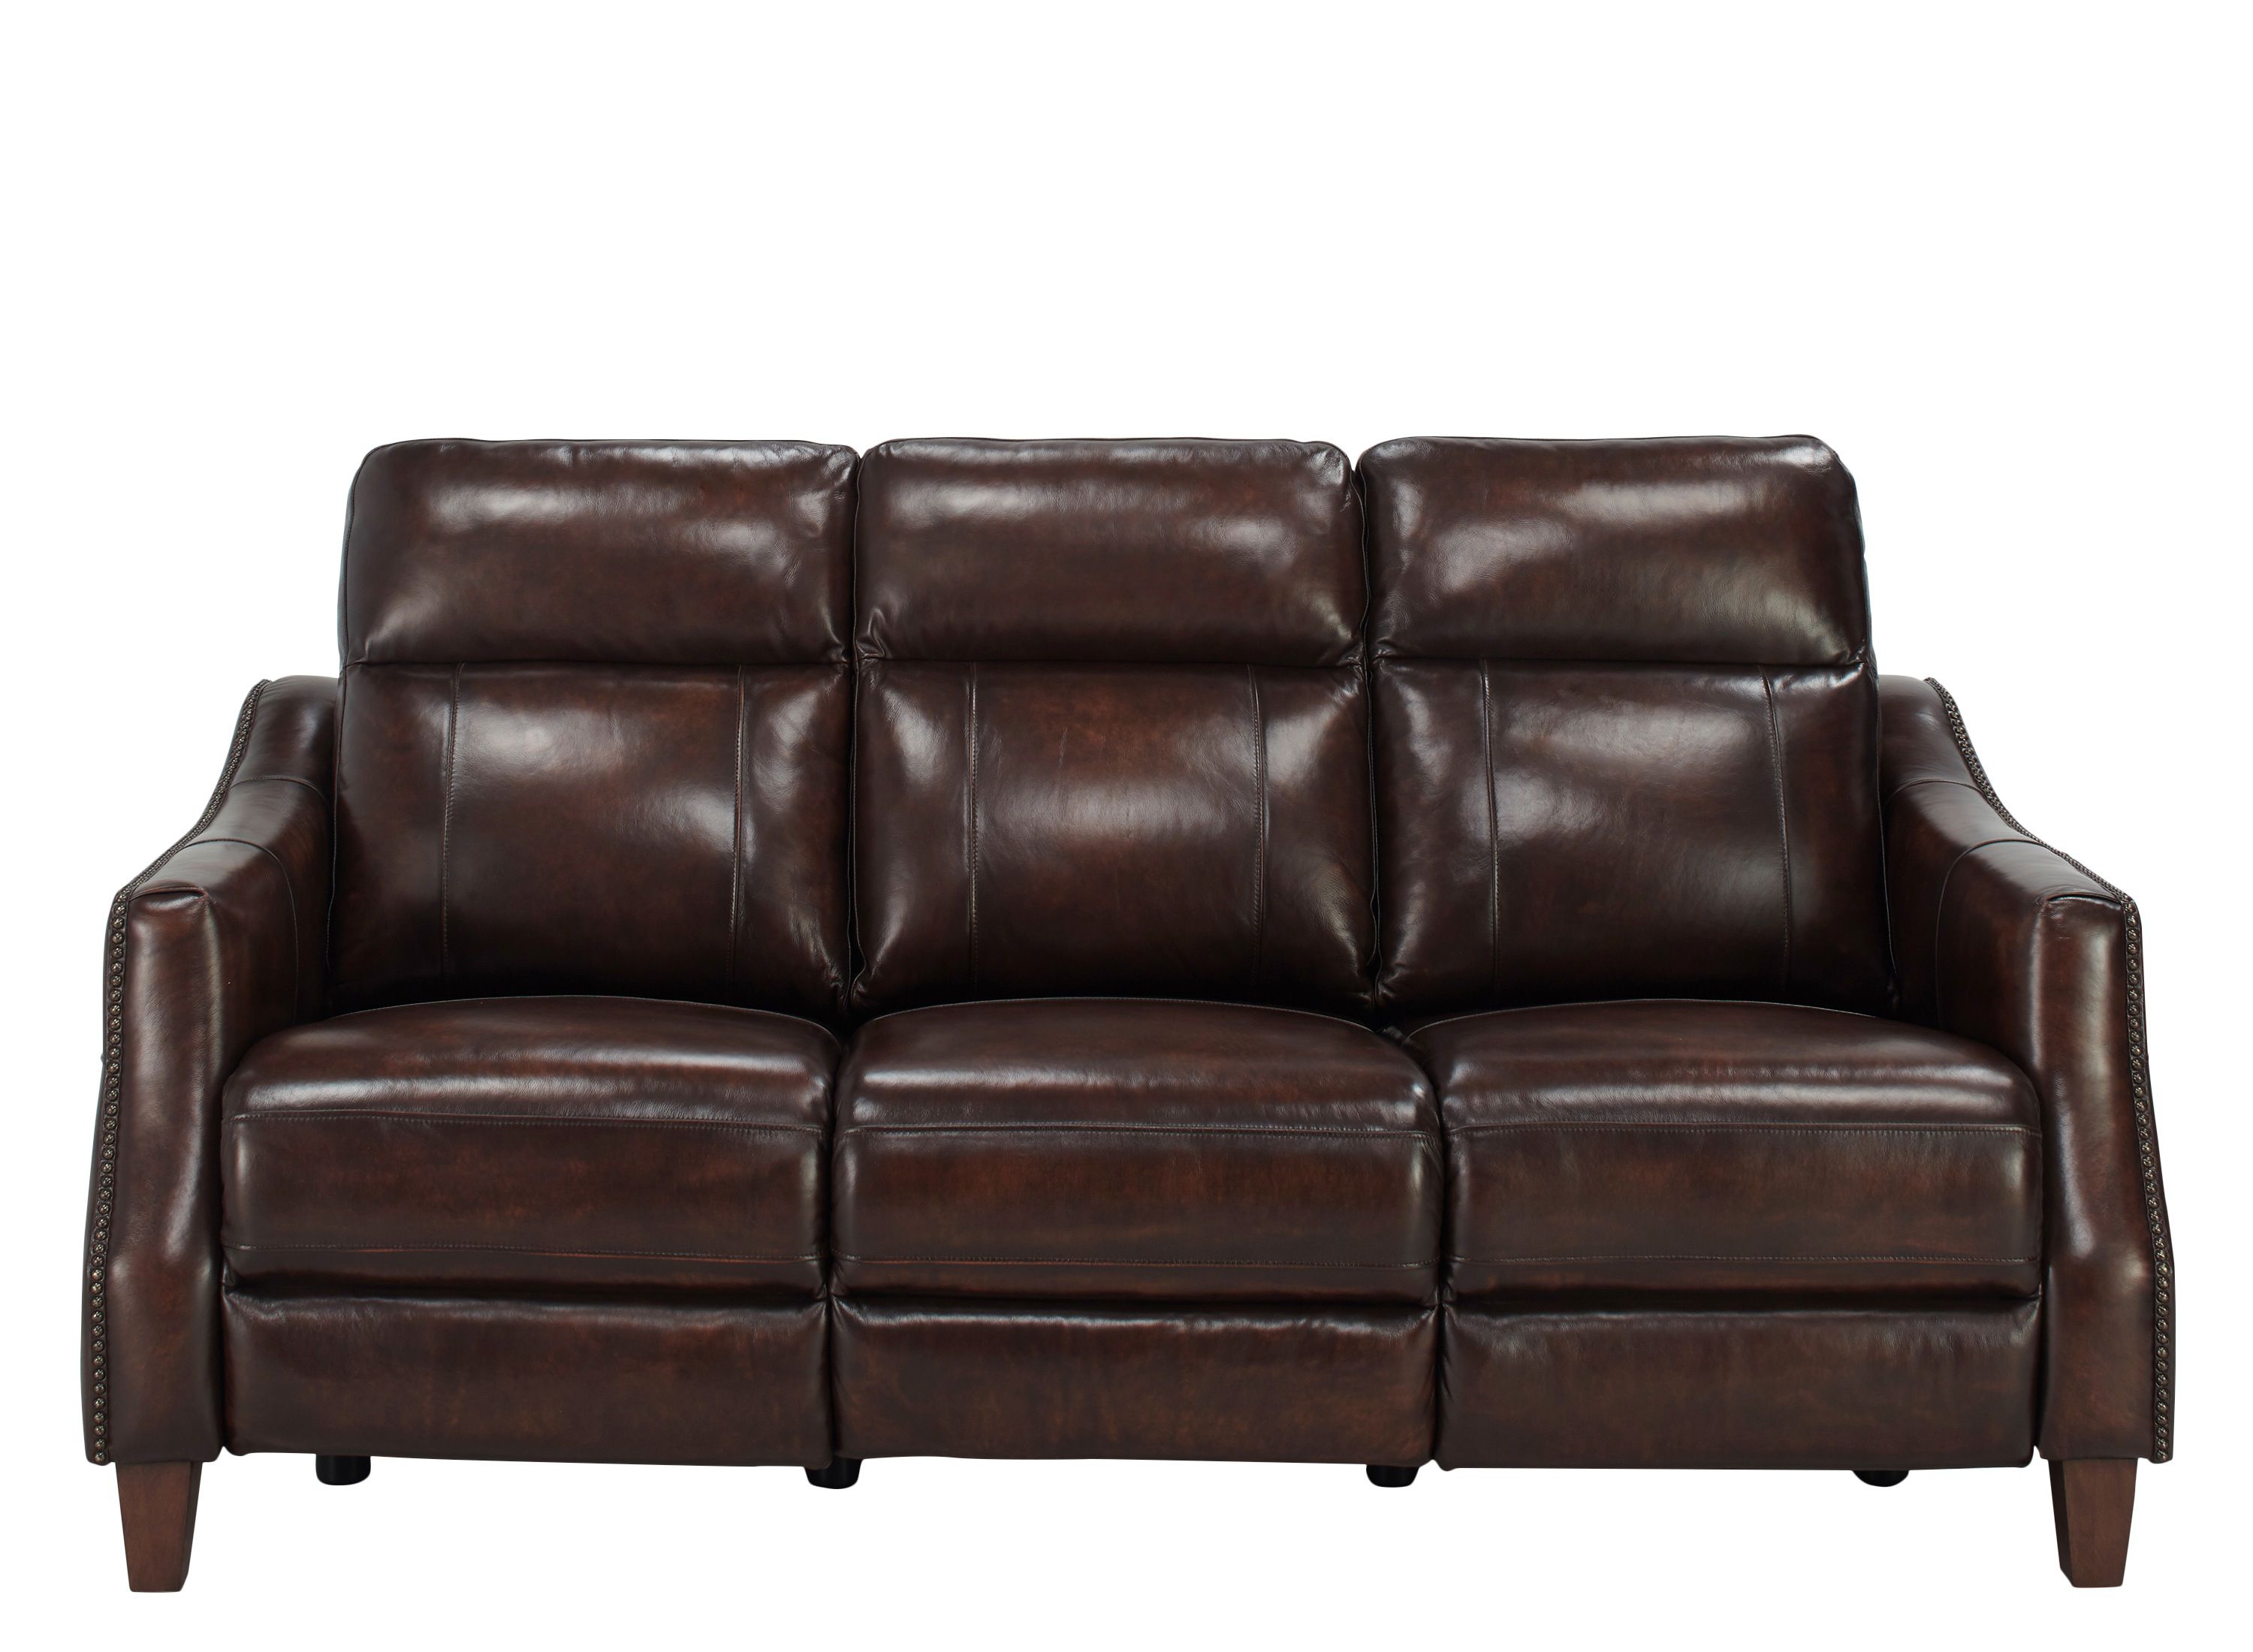 Thomas Click-Clack Convertible Sofa - Dark Brown